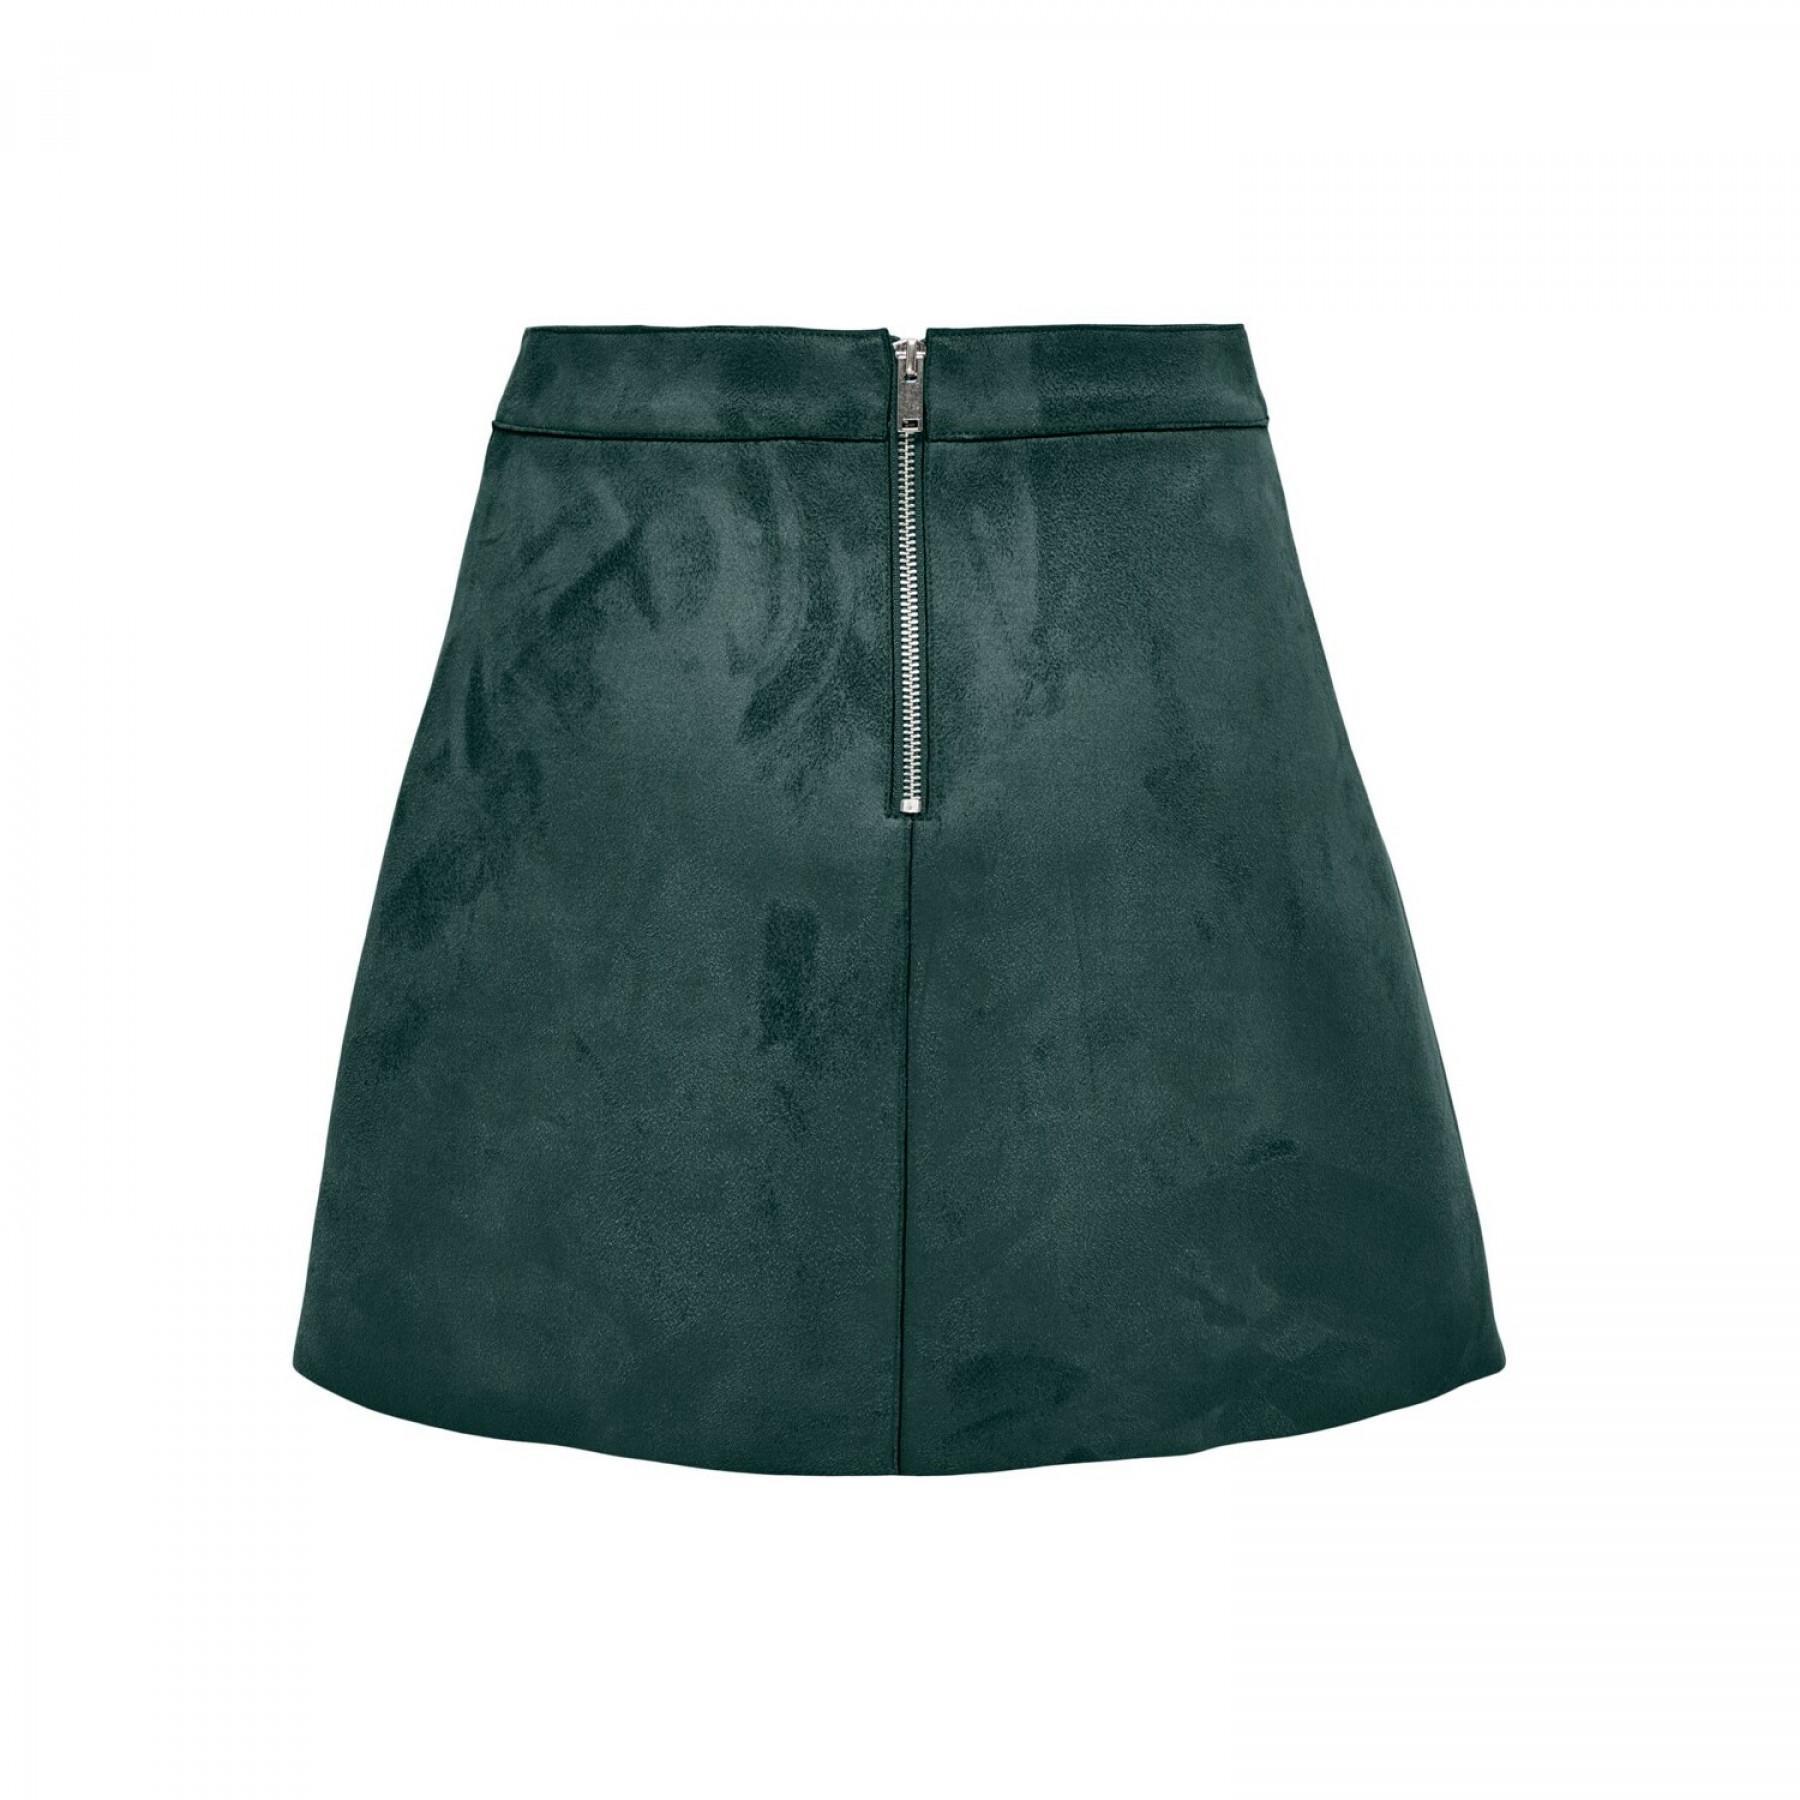 Women's skirt Only onllinea